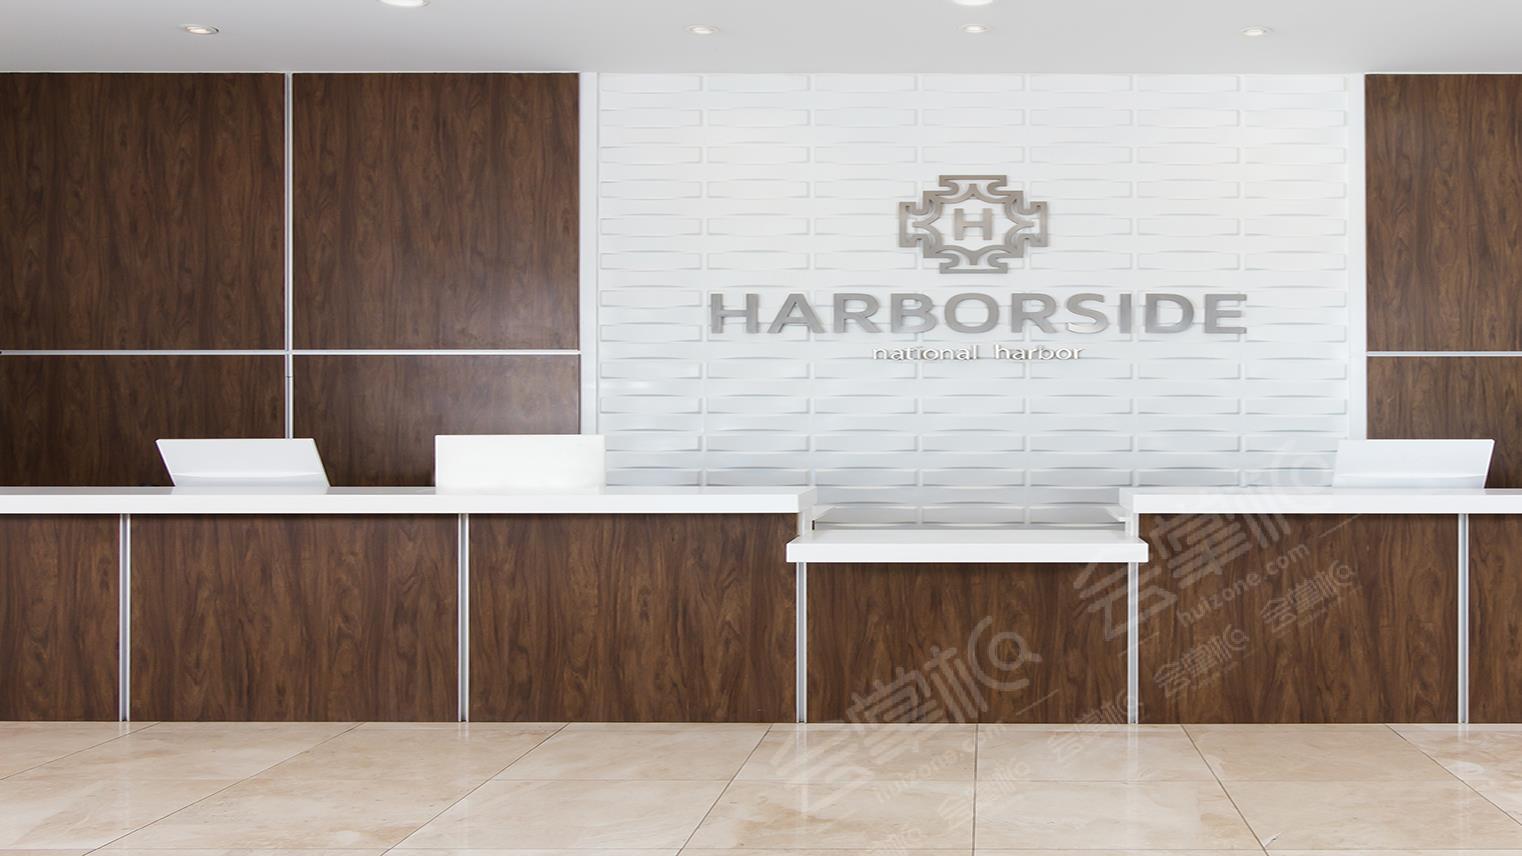 Harborside Hotel